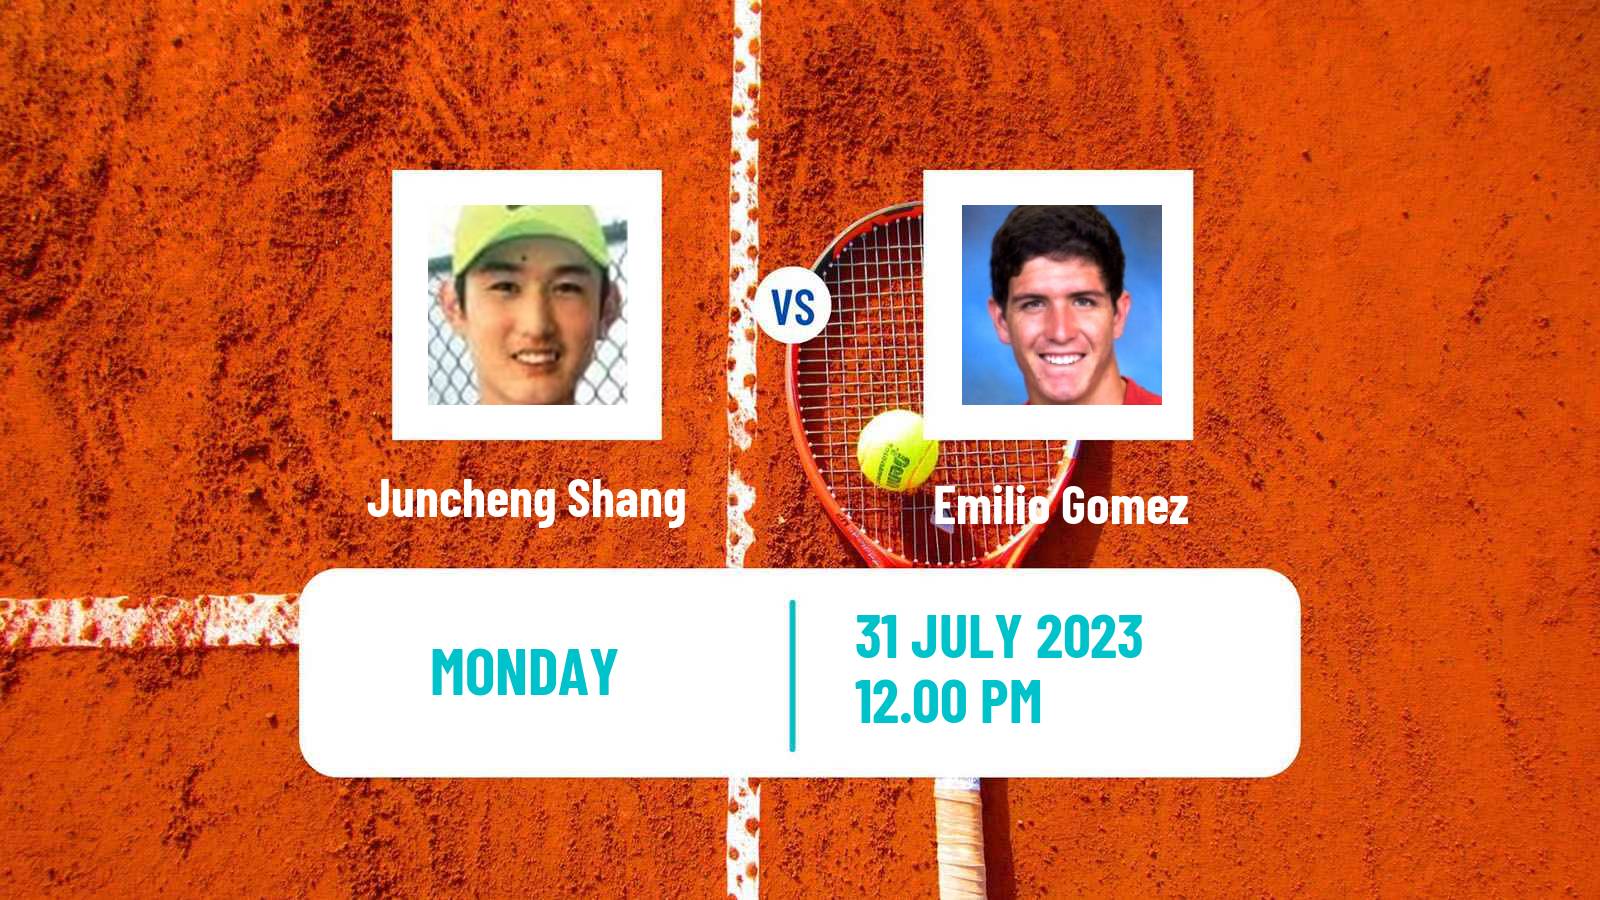 Tennis ATP Washington Juncheng Shang - Emilio Gomez